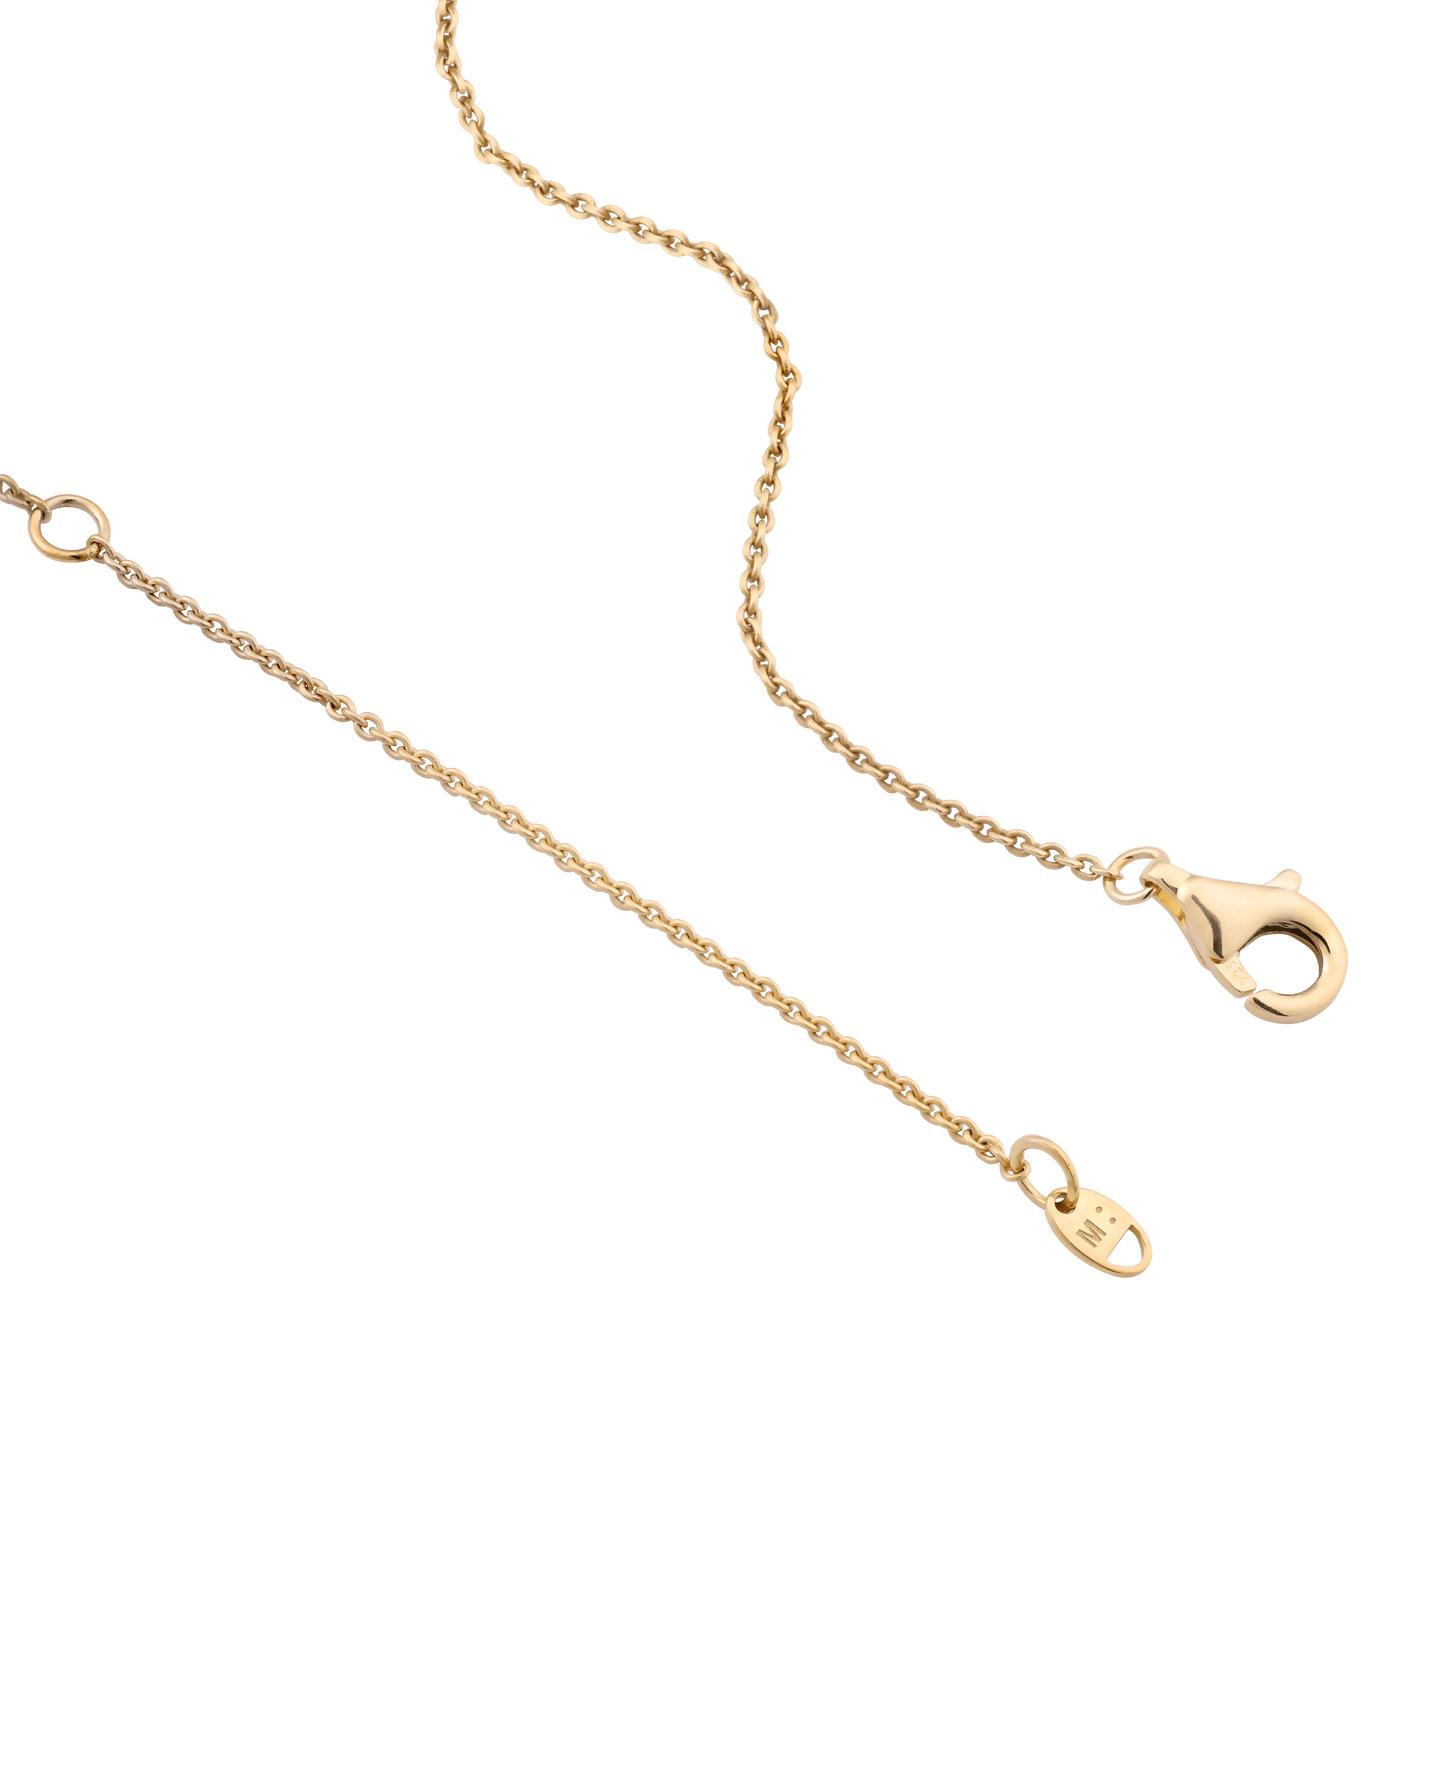 Emerald Solitaire Diamond Bracelet - 14K Yellow Gold Bracelets magal-dev 